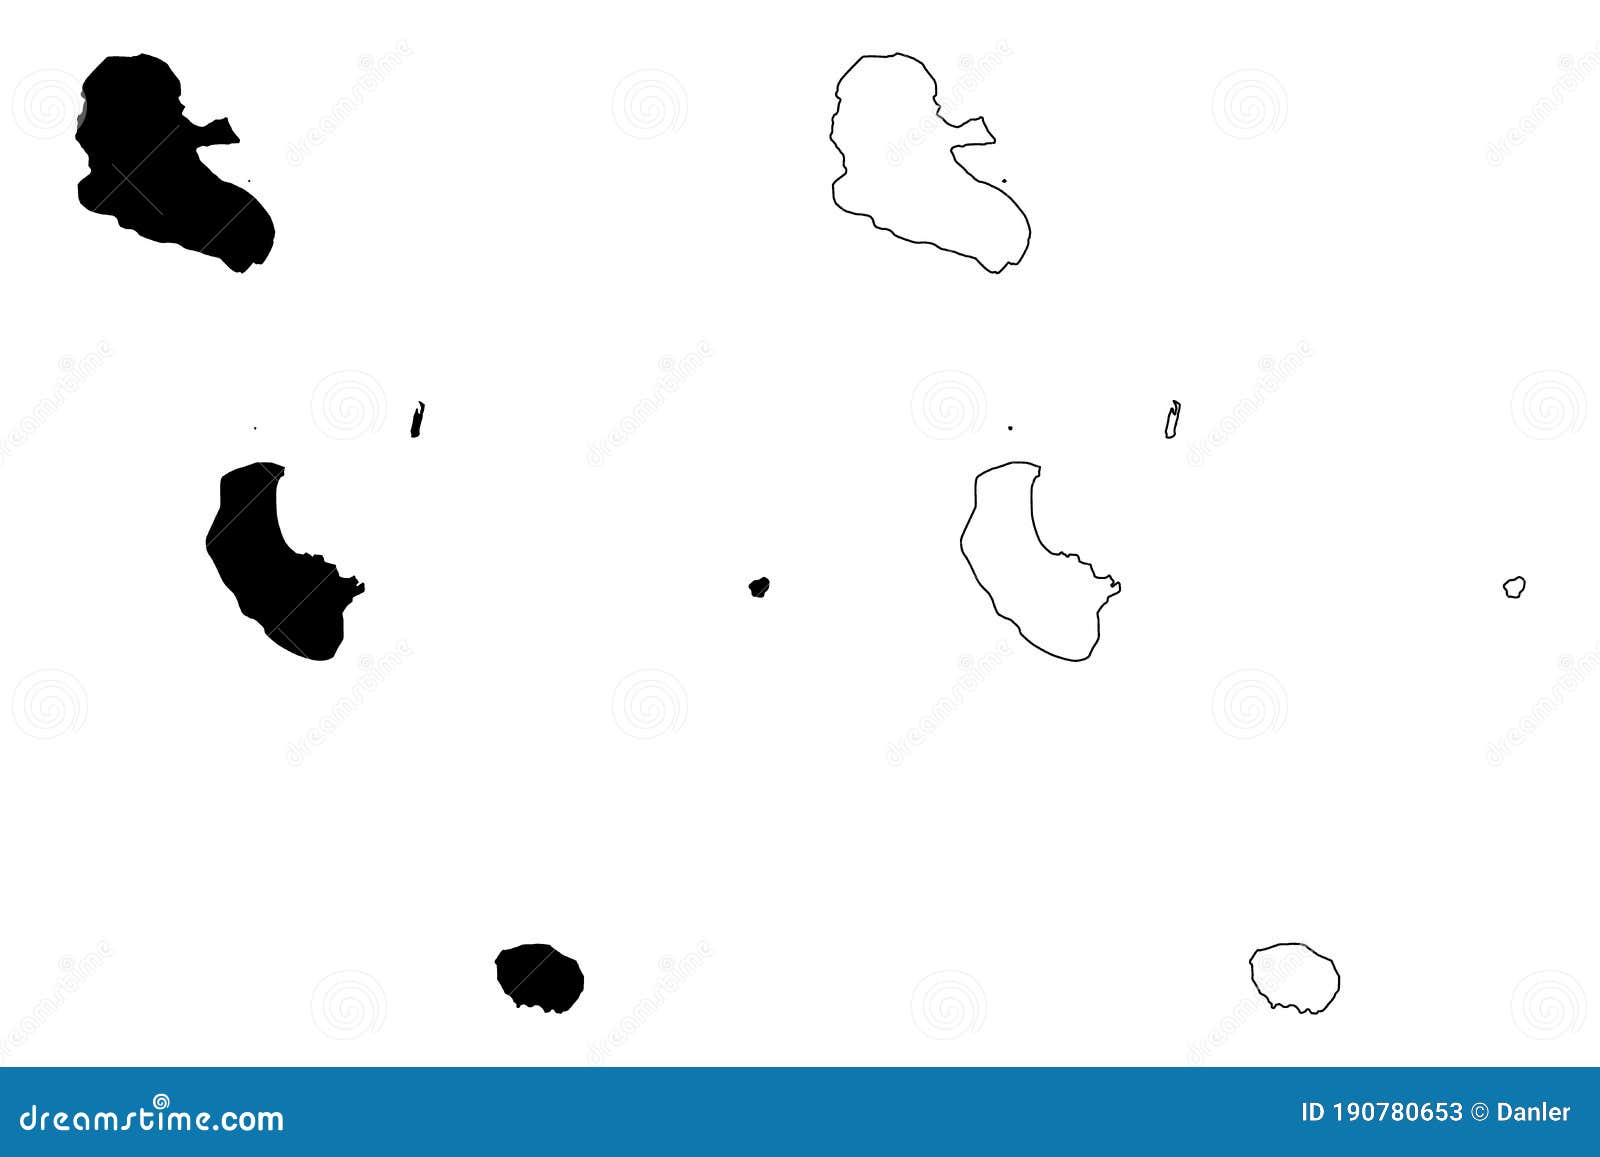 tafea province republic of vanuatu, archipelago map  , scribble sketch tanna, aniwa, futuna, erromango, anatom